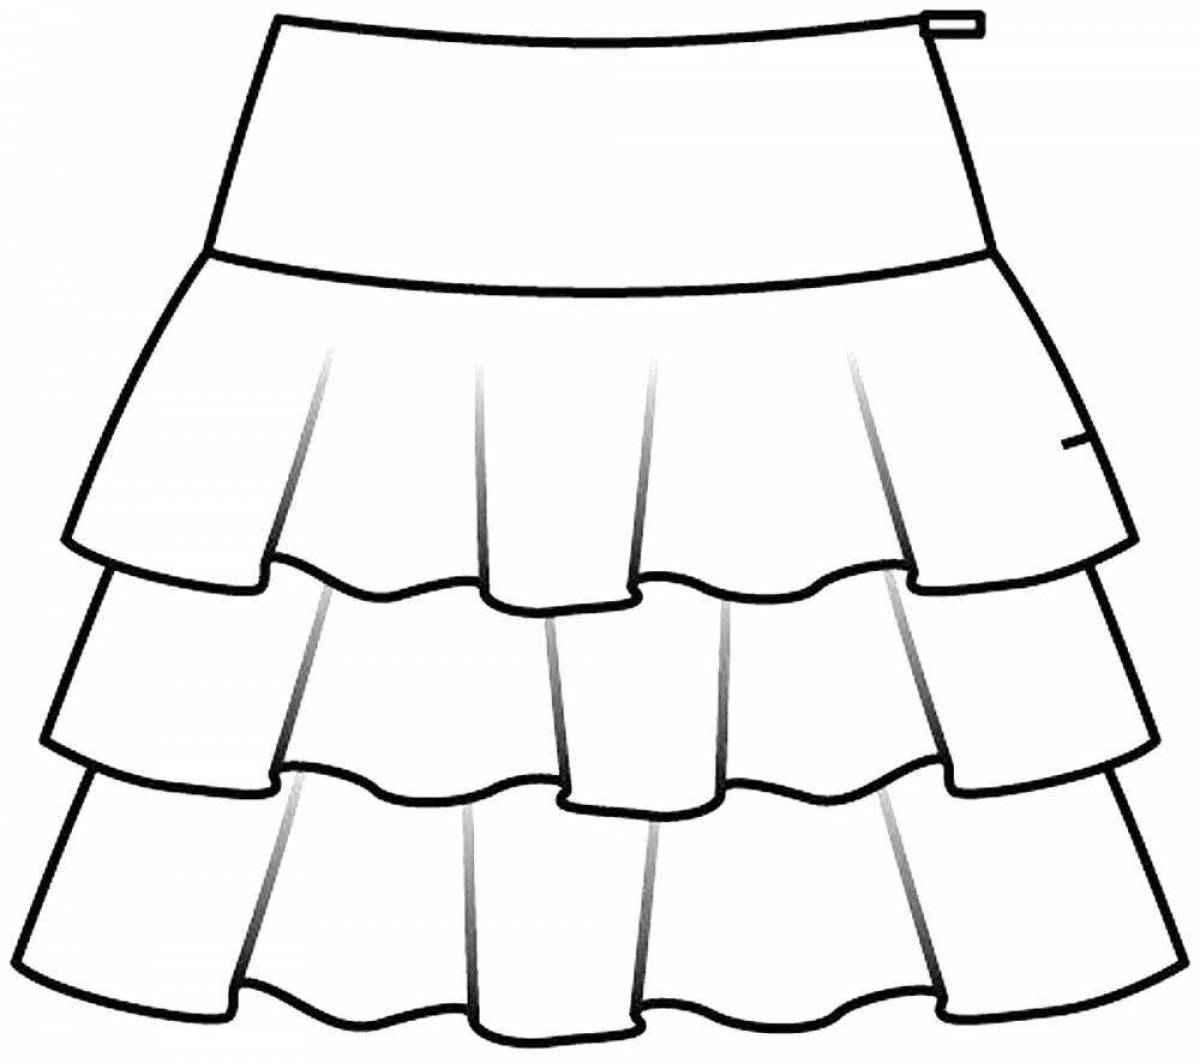 Fun skirt coloring for kids